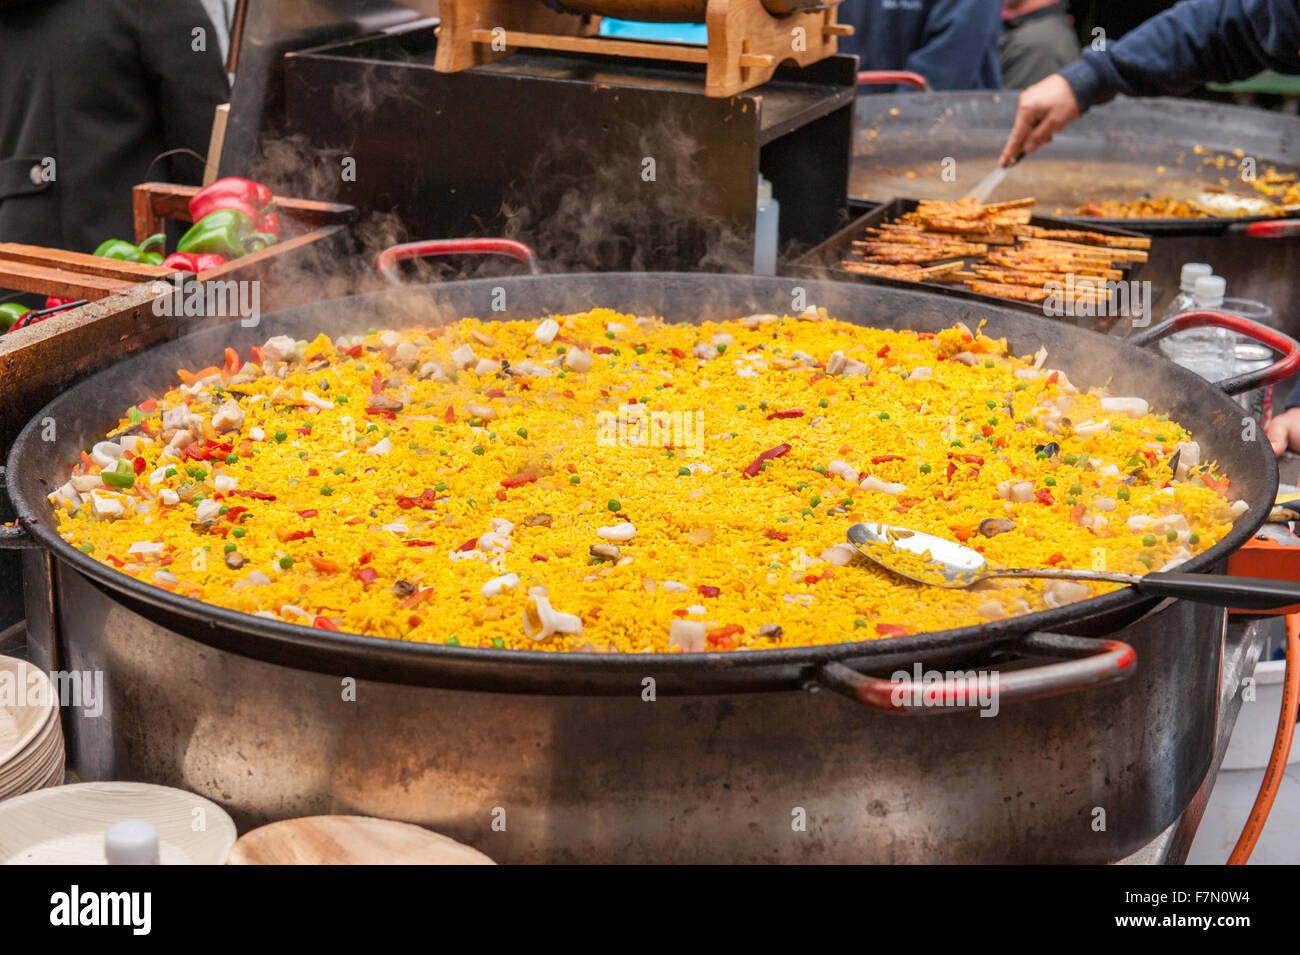 https://c8.alamy.com/comp/F7N0W4/paella-rice-dish-in-large-cooking-pan-at-market-F7N0W4.jpg